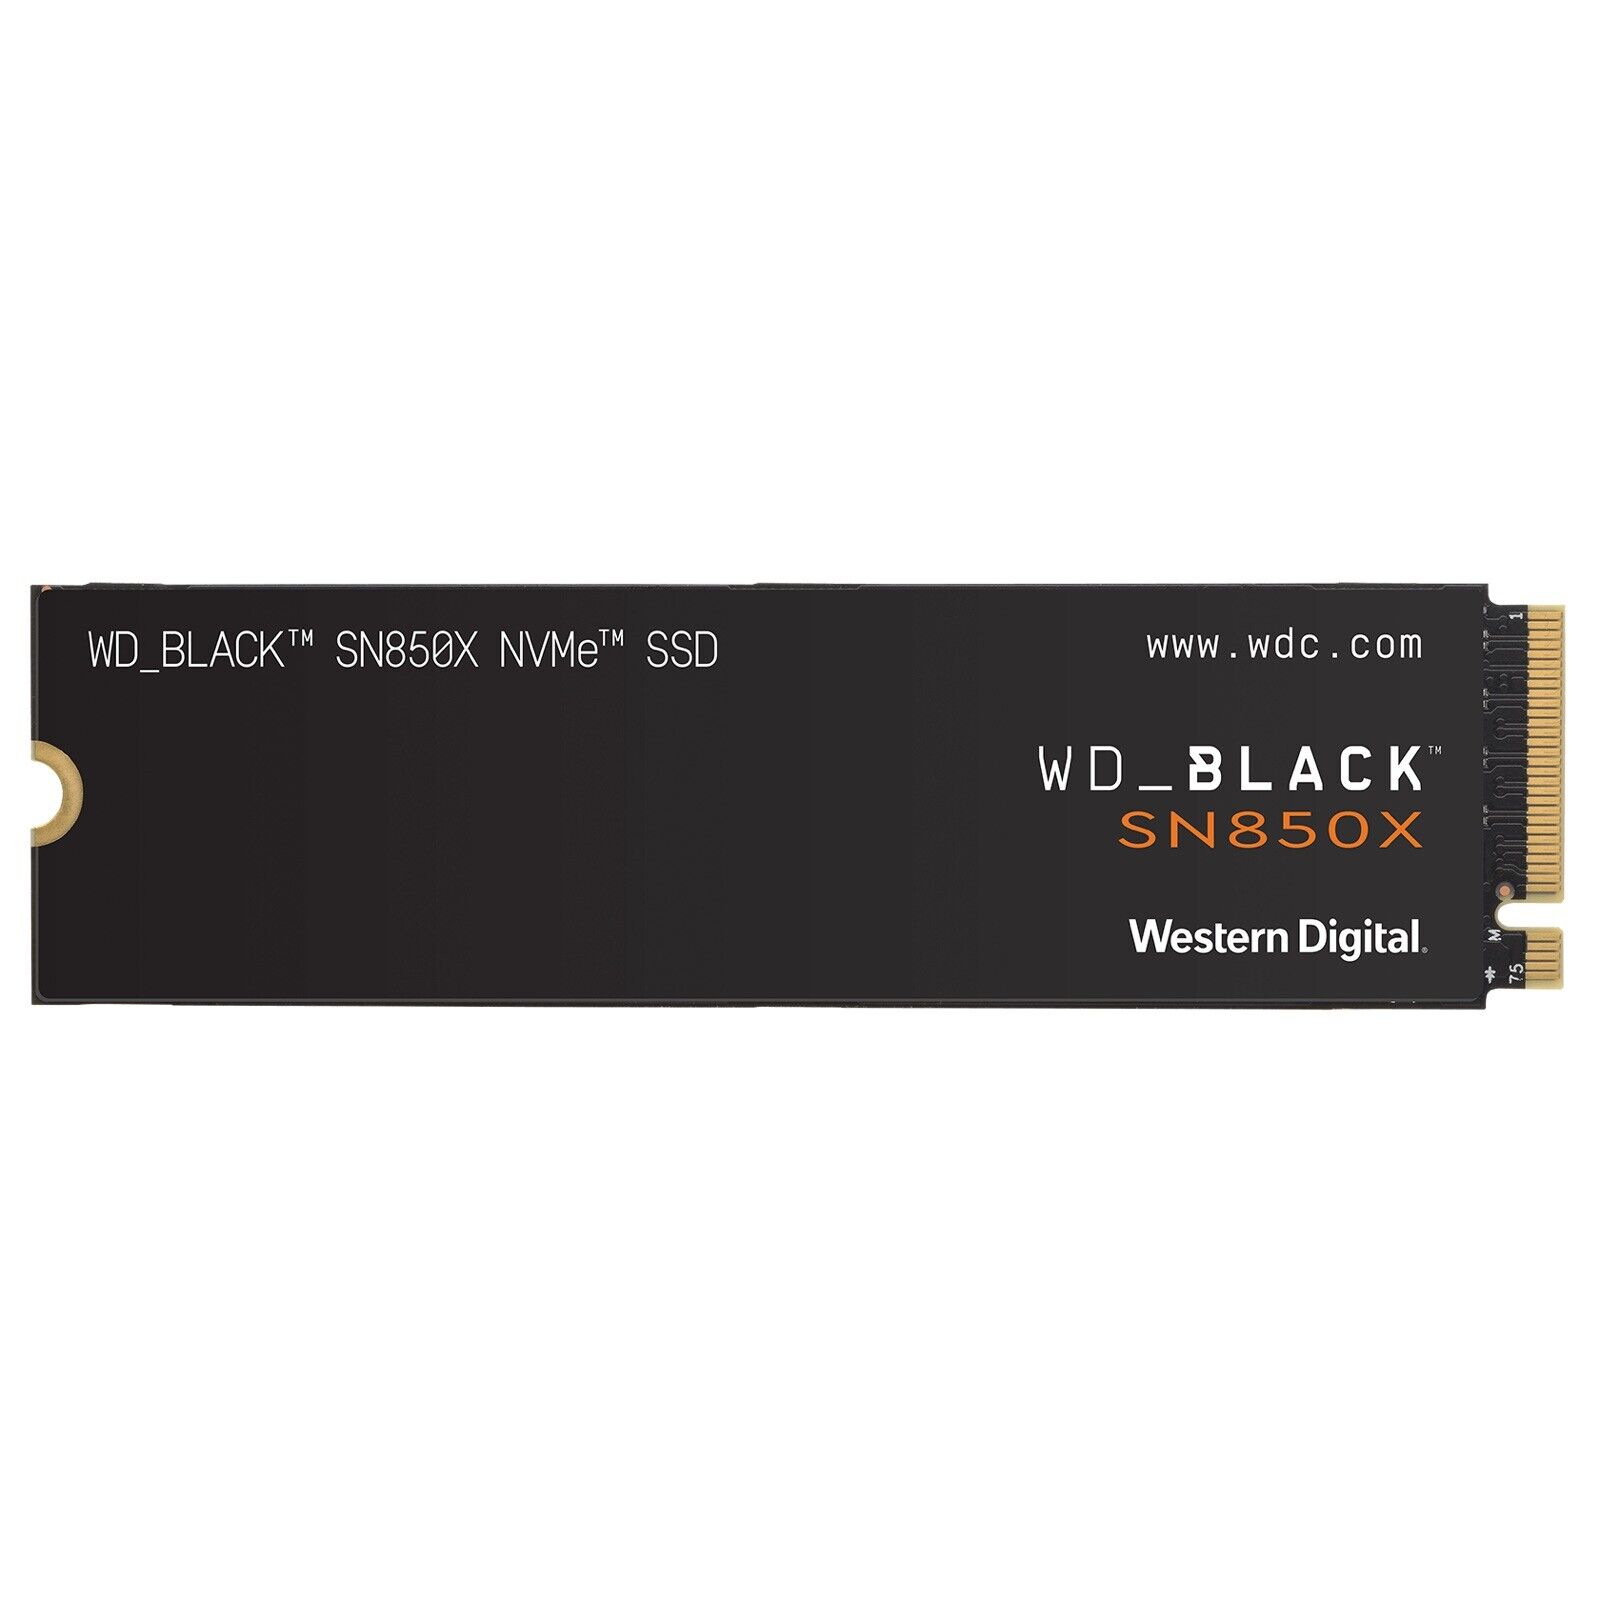 Western Digital WD BLACK SN850X 1TB NVMe Internal Game SSD up to 7300MB Read